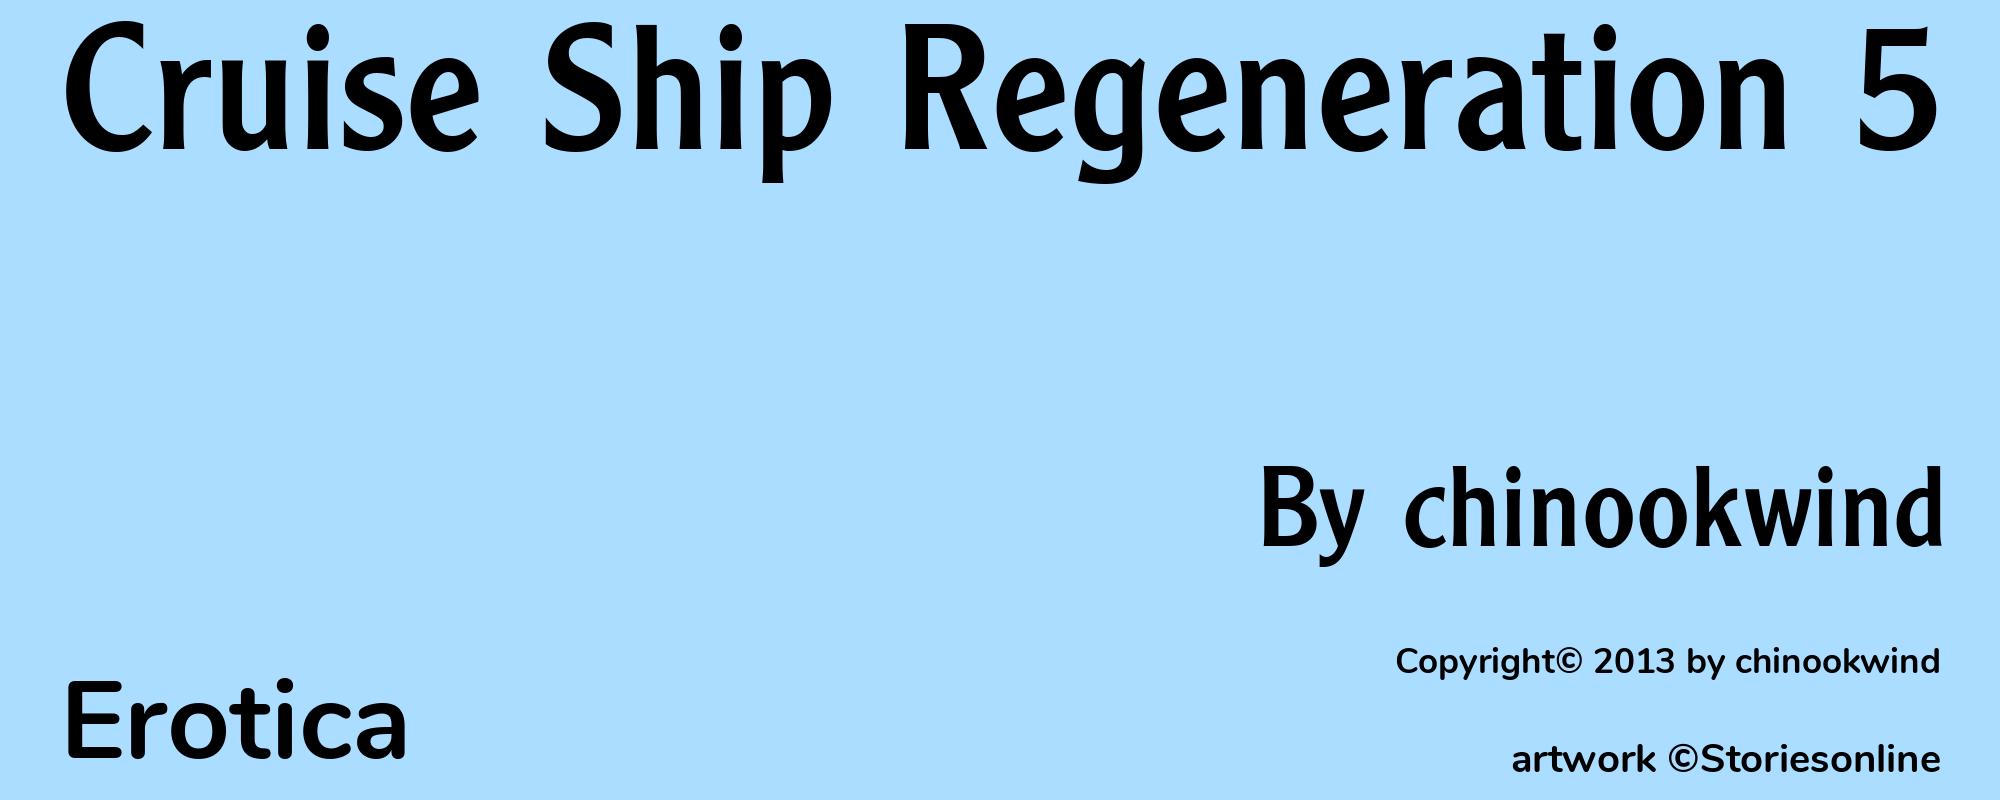 Cruise Ship Regeneration 5 - Cover